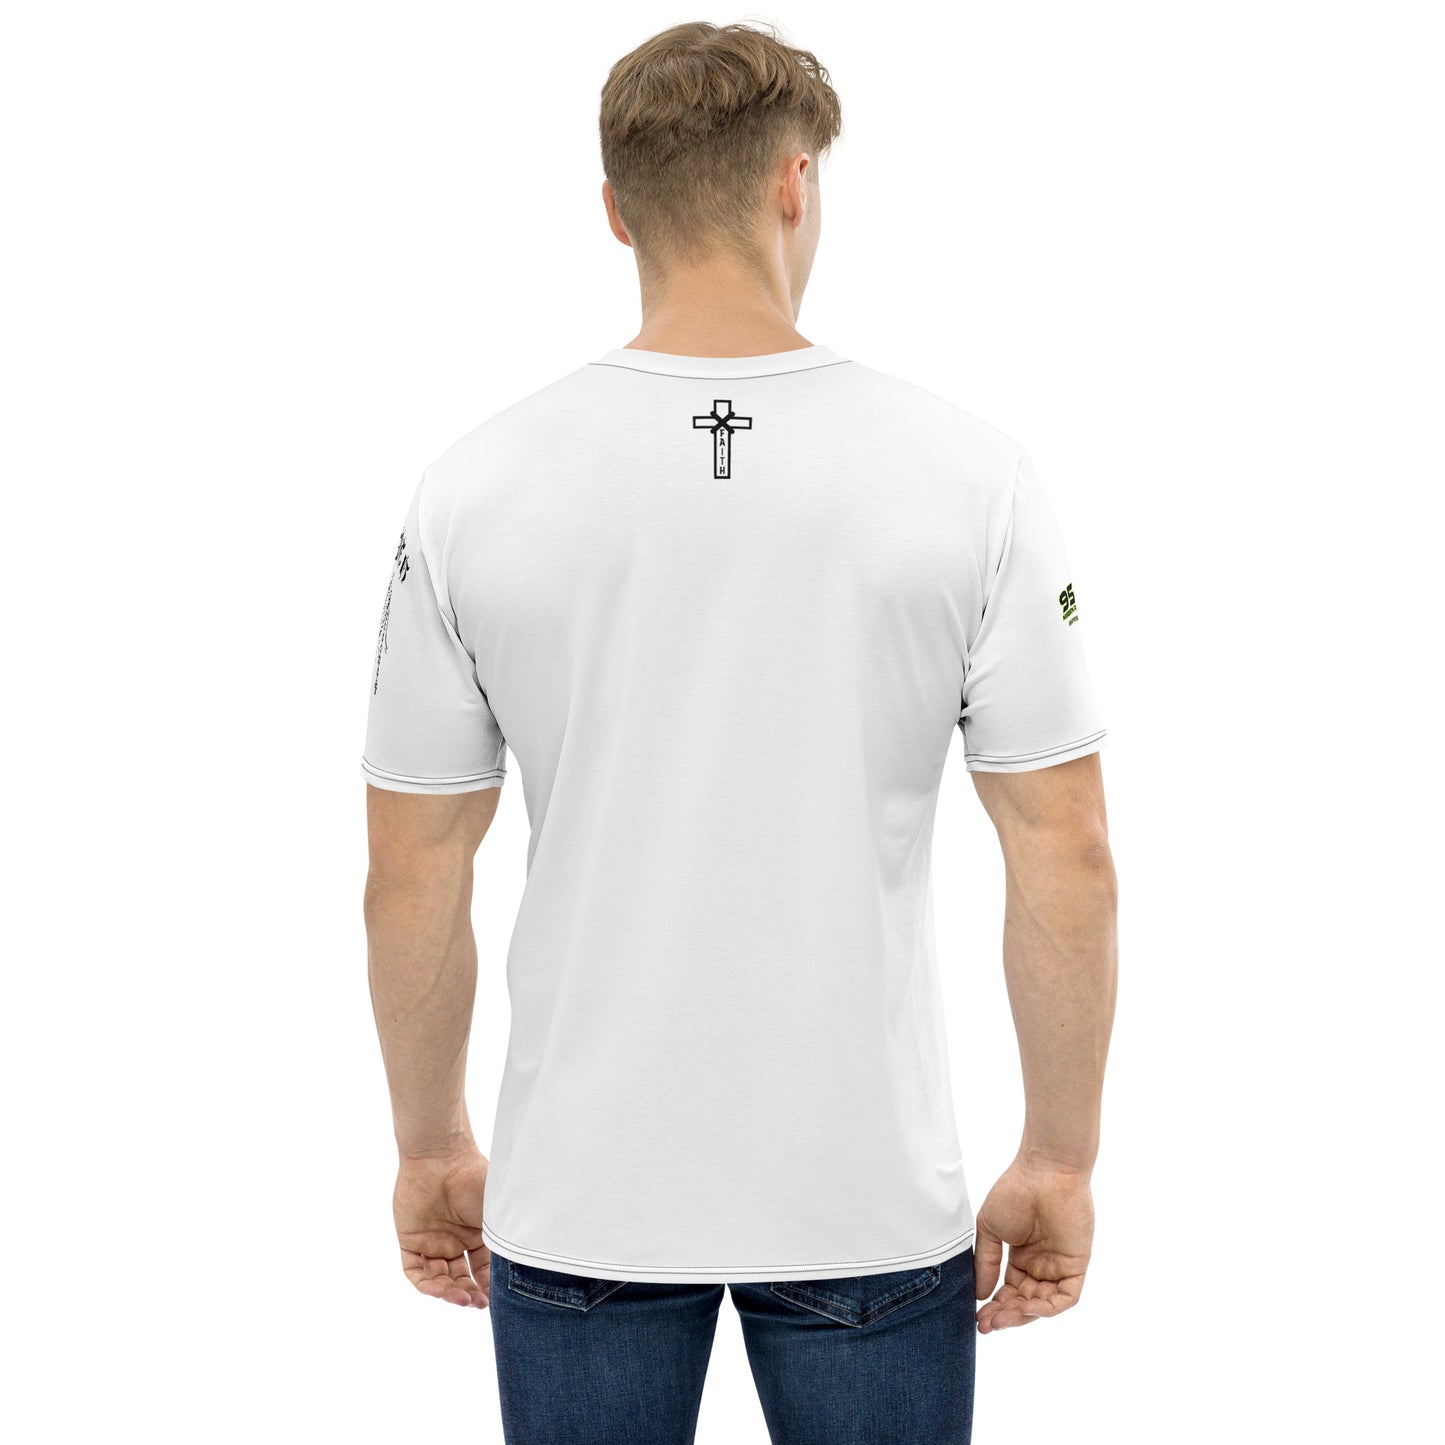 Faith 954 Men's t-shirt